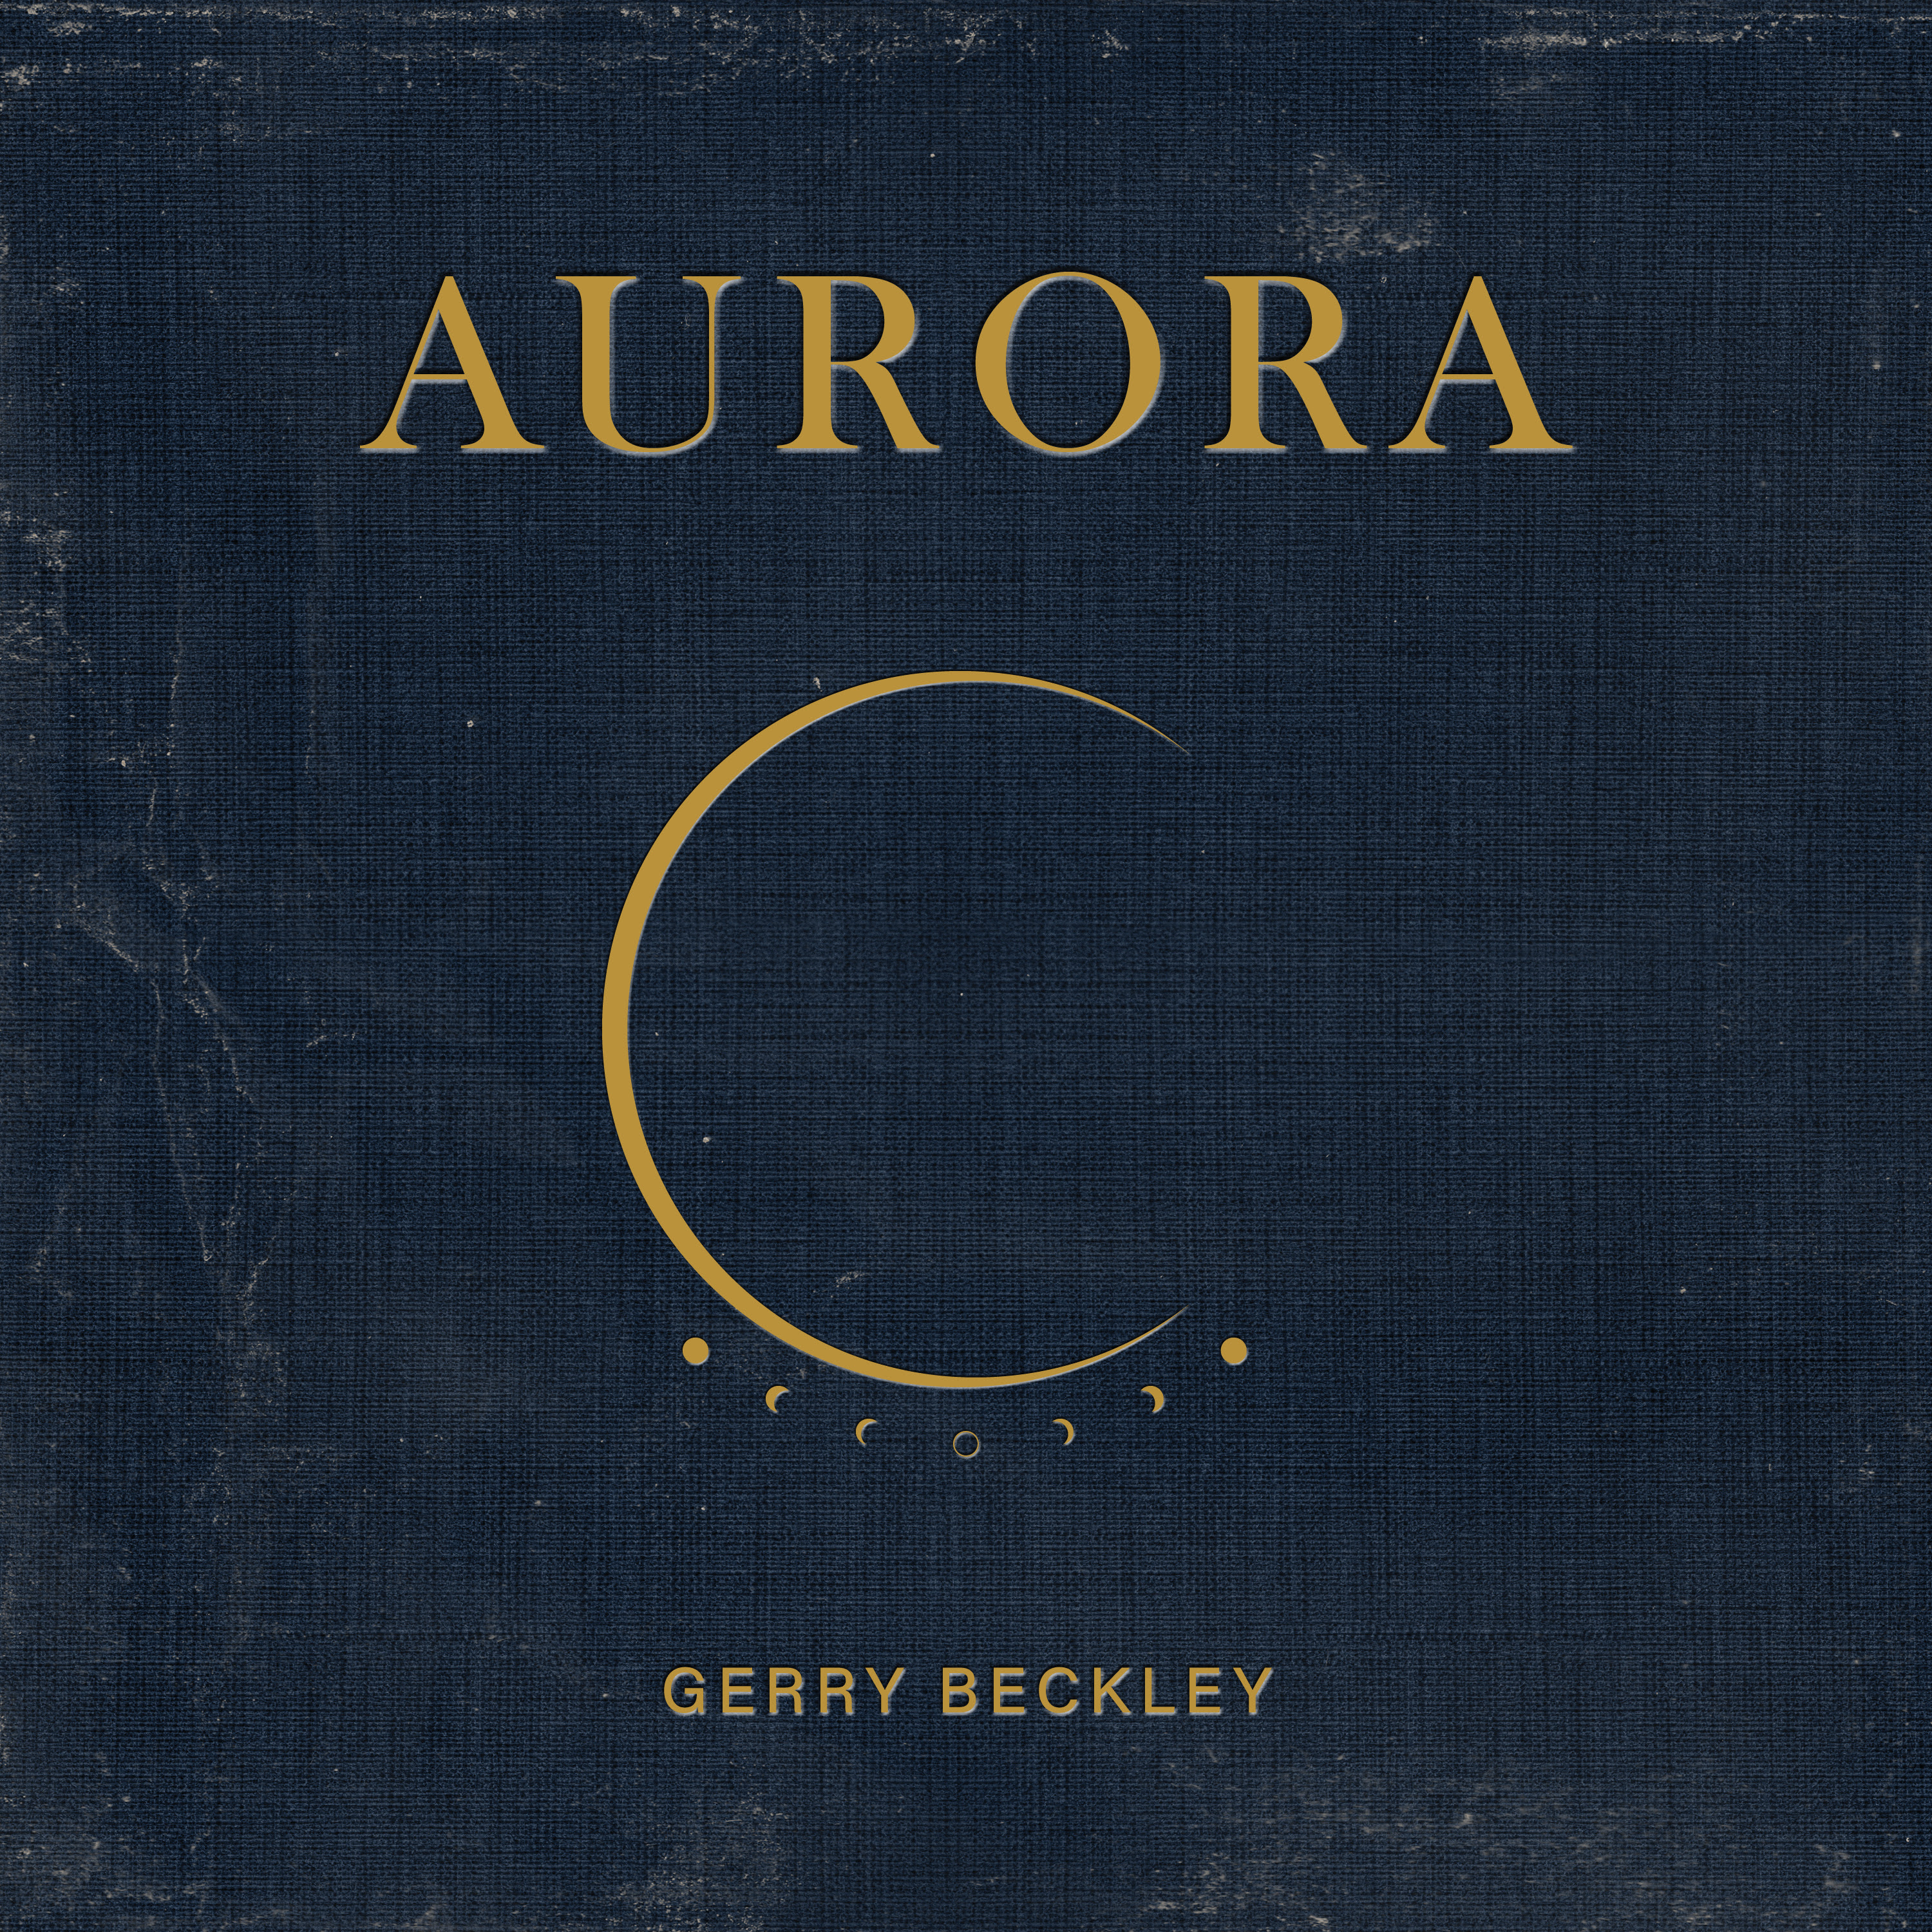 America's GERRY BECKLEY Releases "Aurora" Digitally Tomorrow